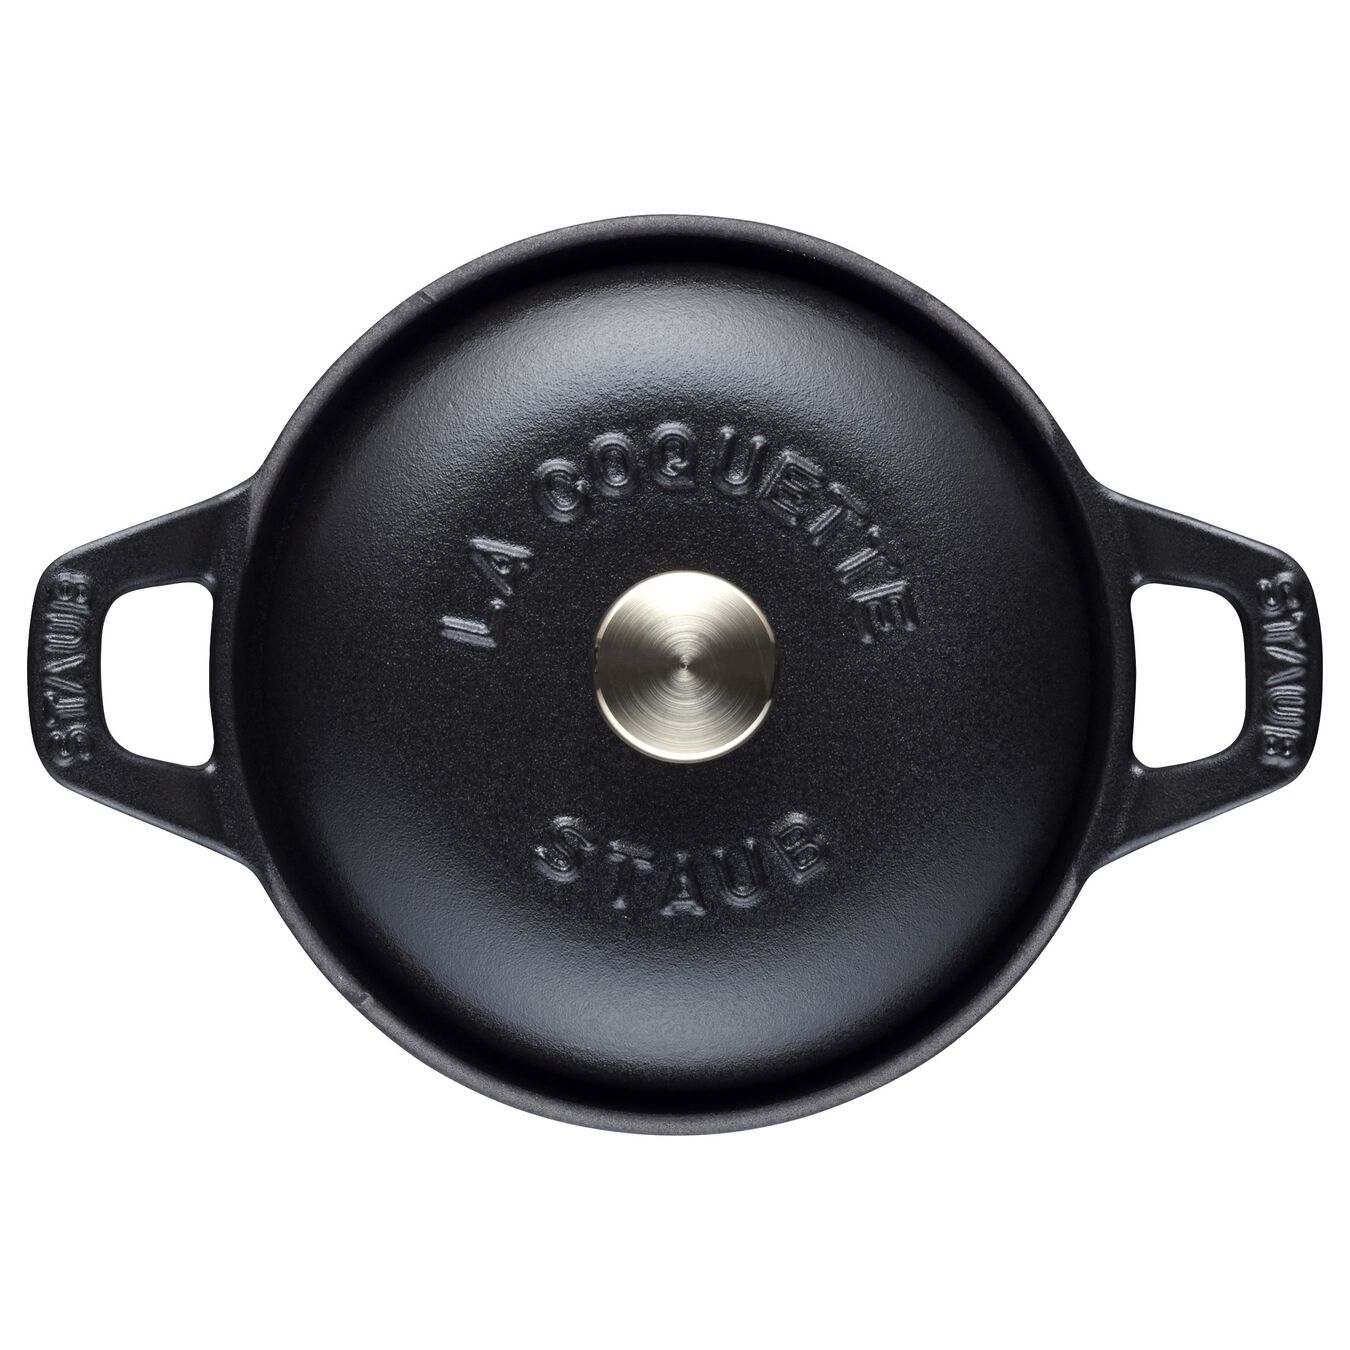 500 ml cast iron round La Coquette, black,,large 2